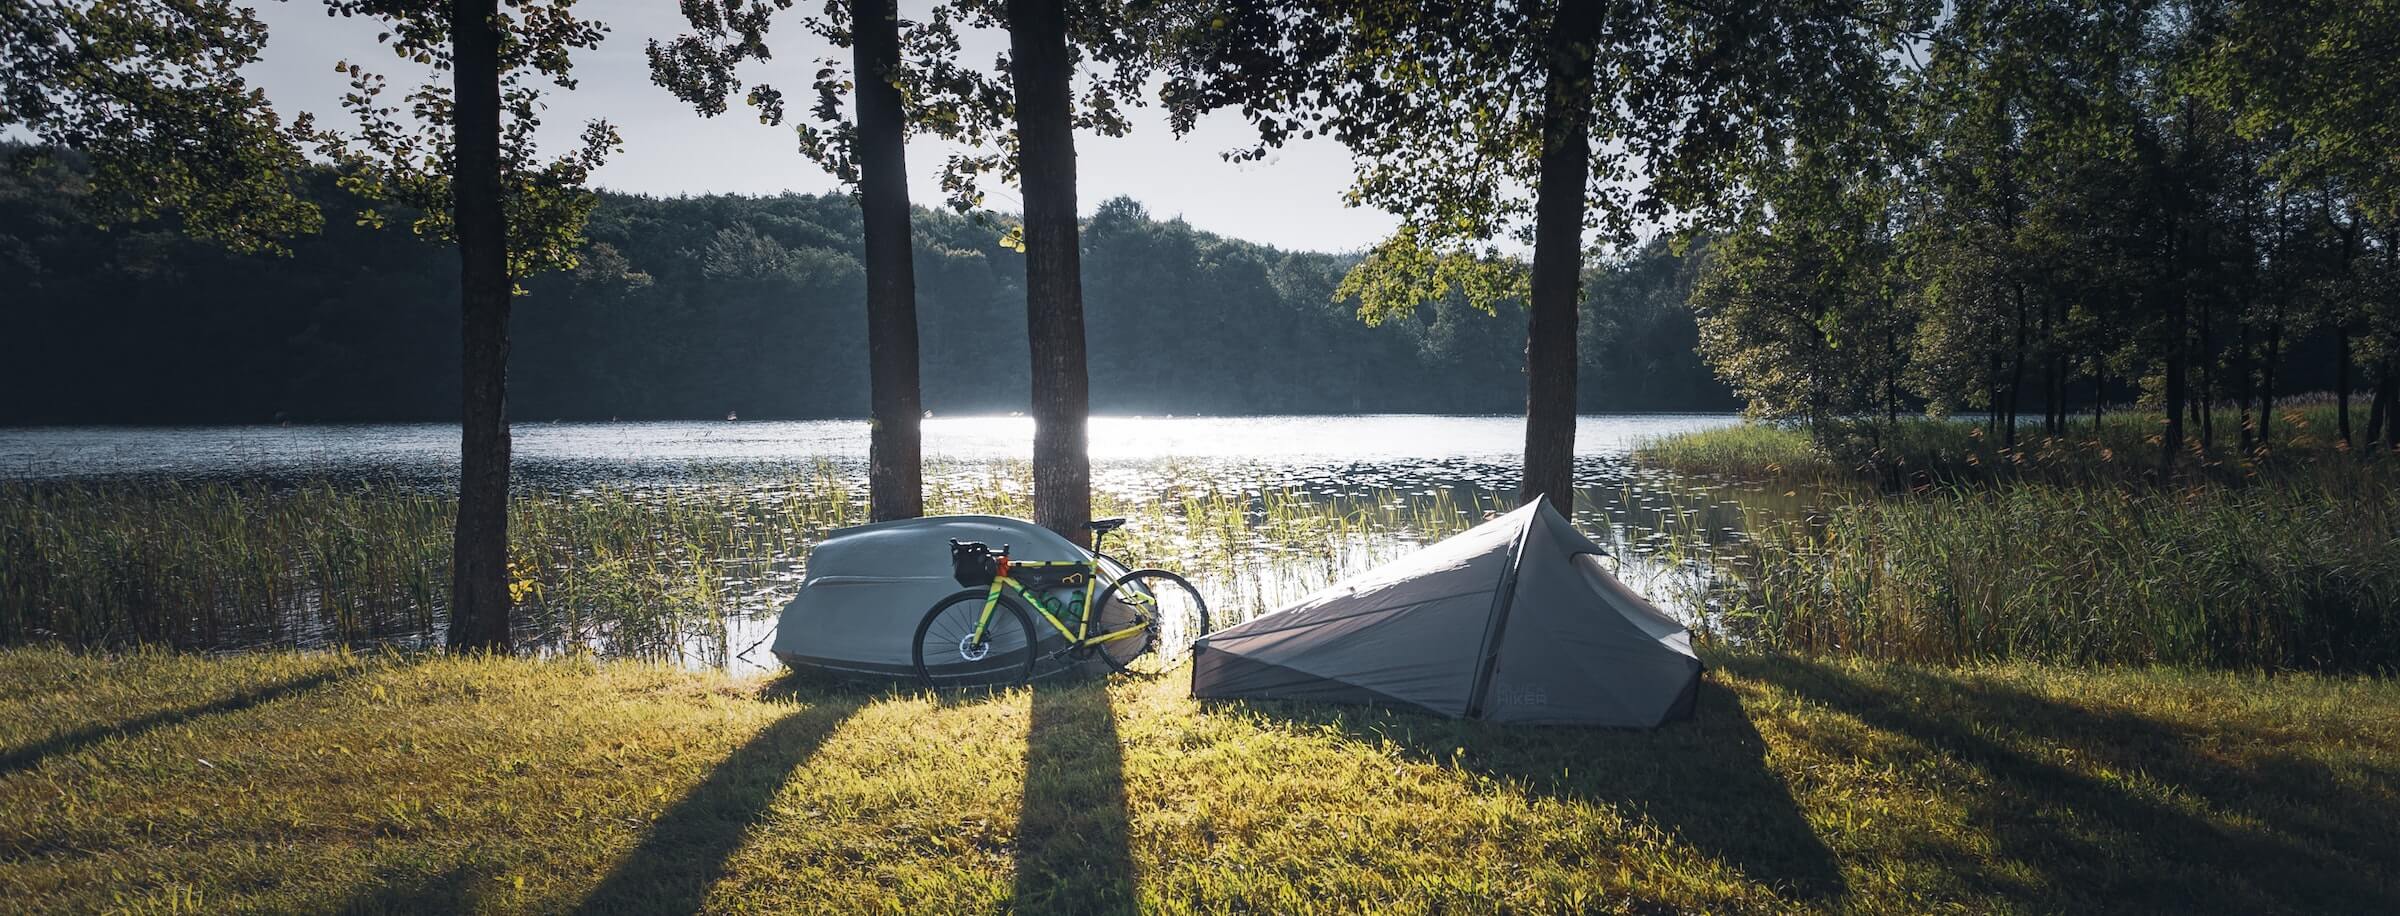 Rower i namiot nad jeziorem